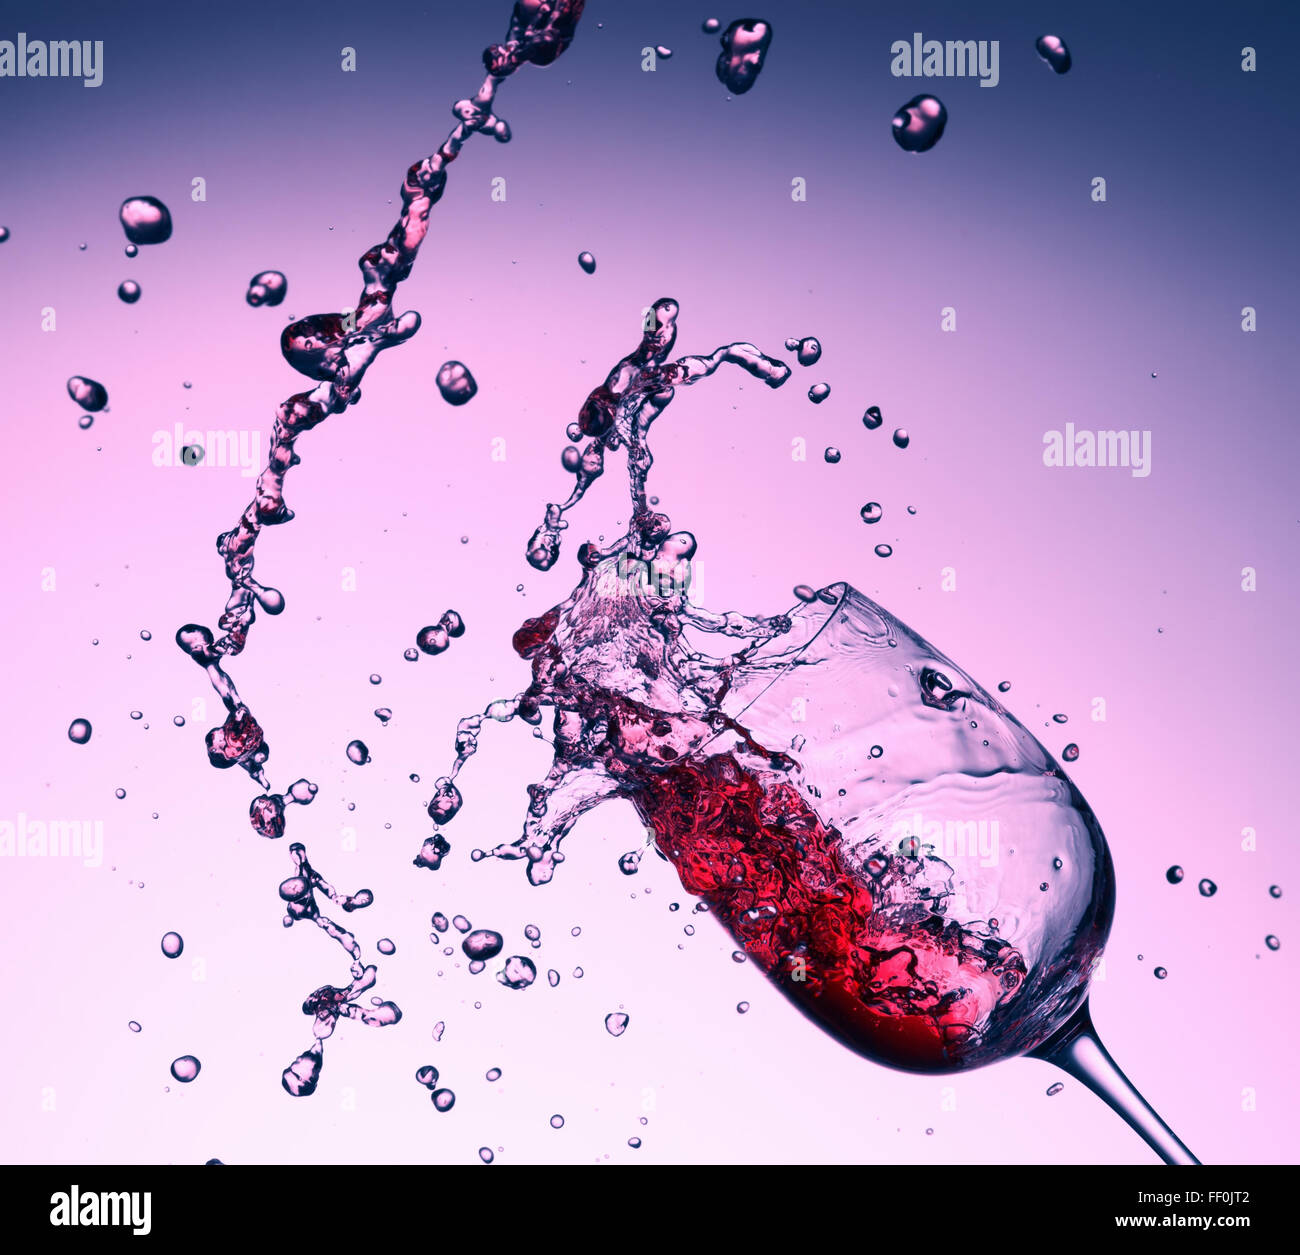 red wine splash from glass on purple background. Stock Photo